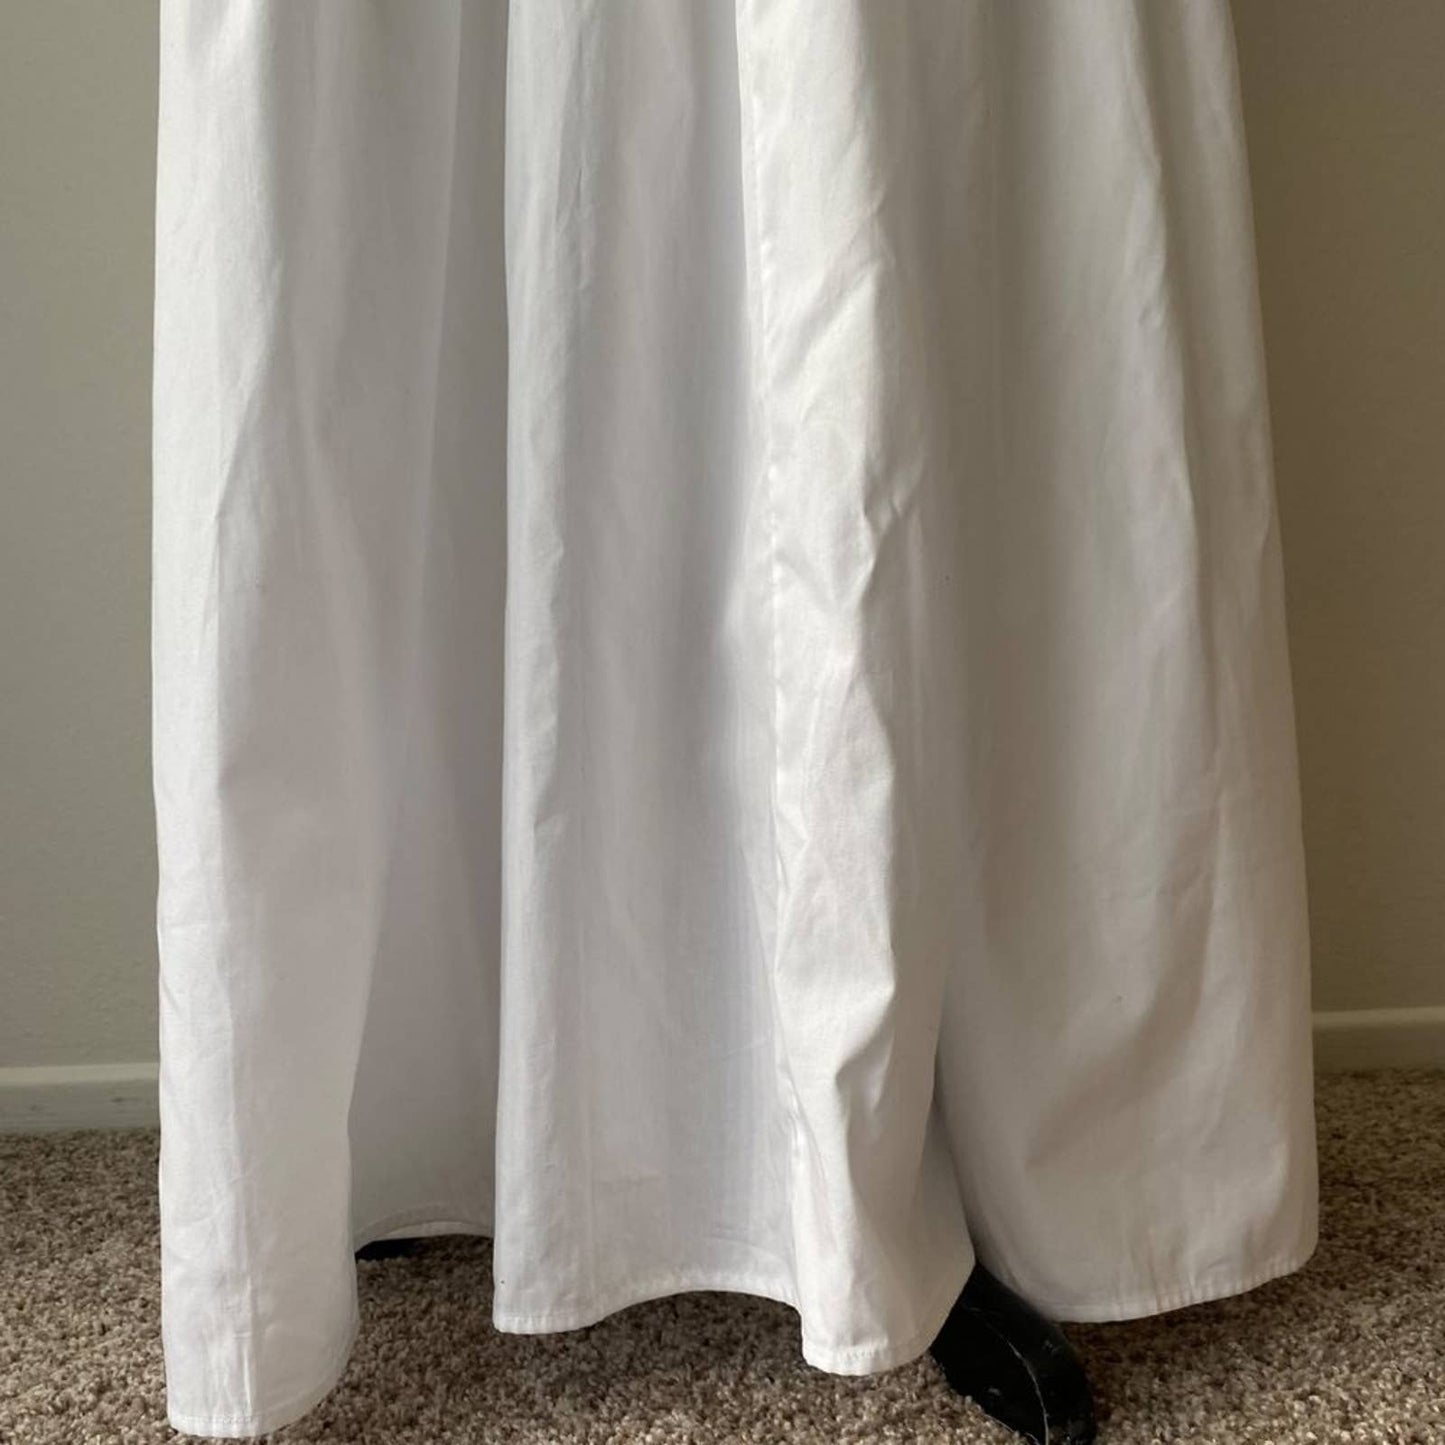 Matthew Bruch sz 2 Full length Cross Strap Maxi Dress NWT